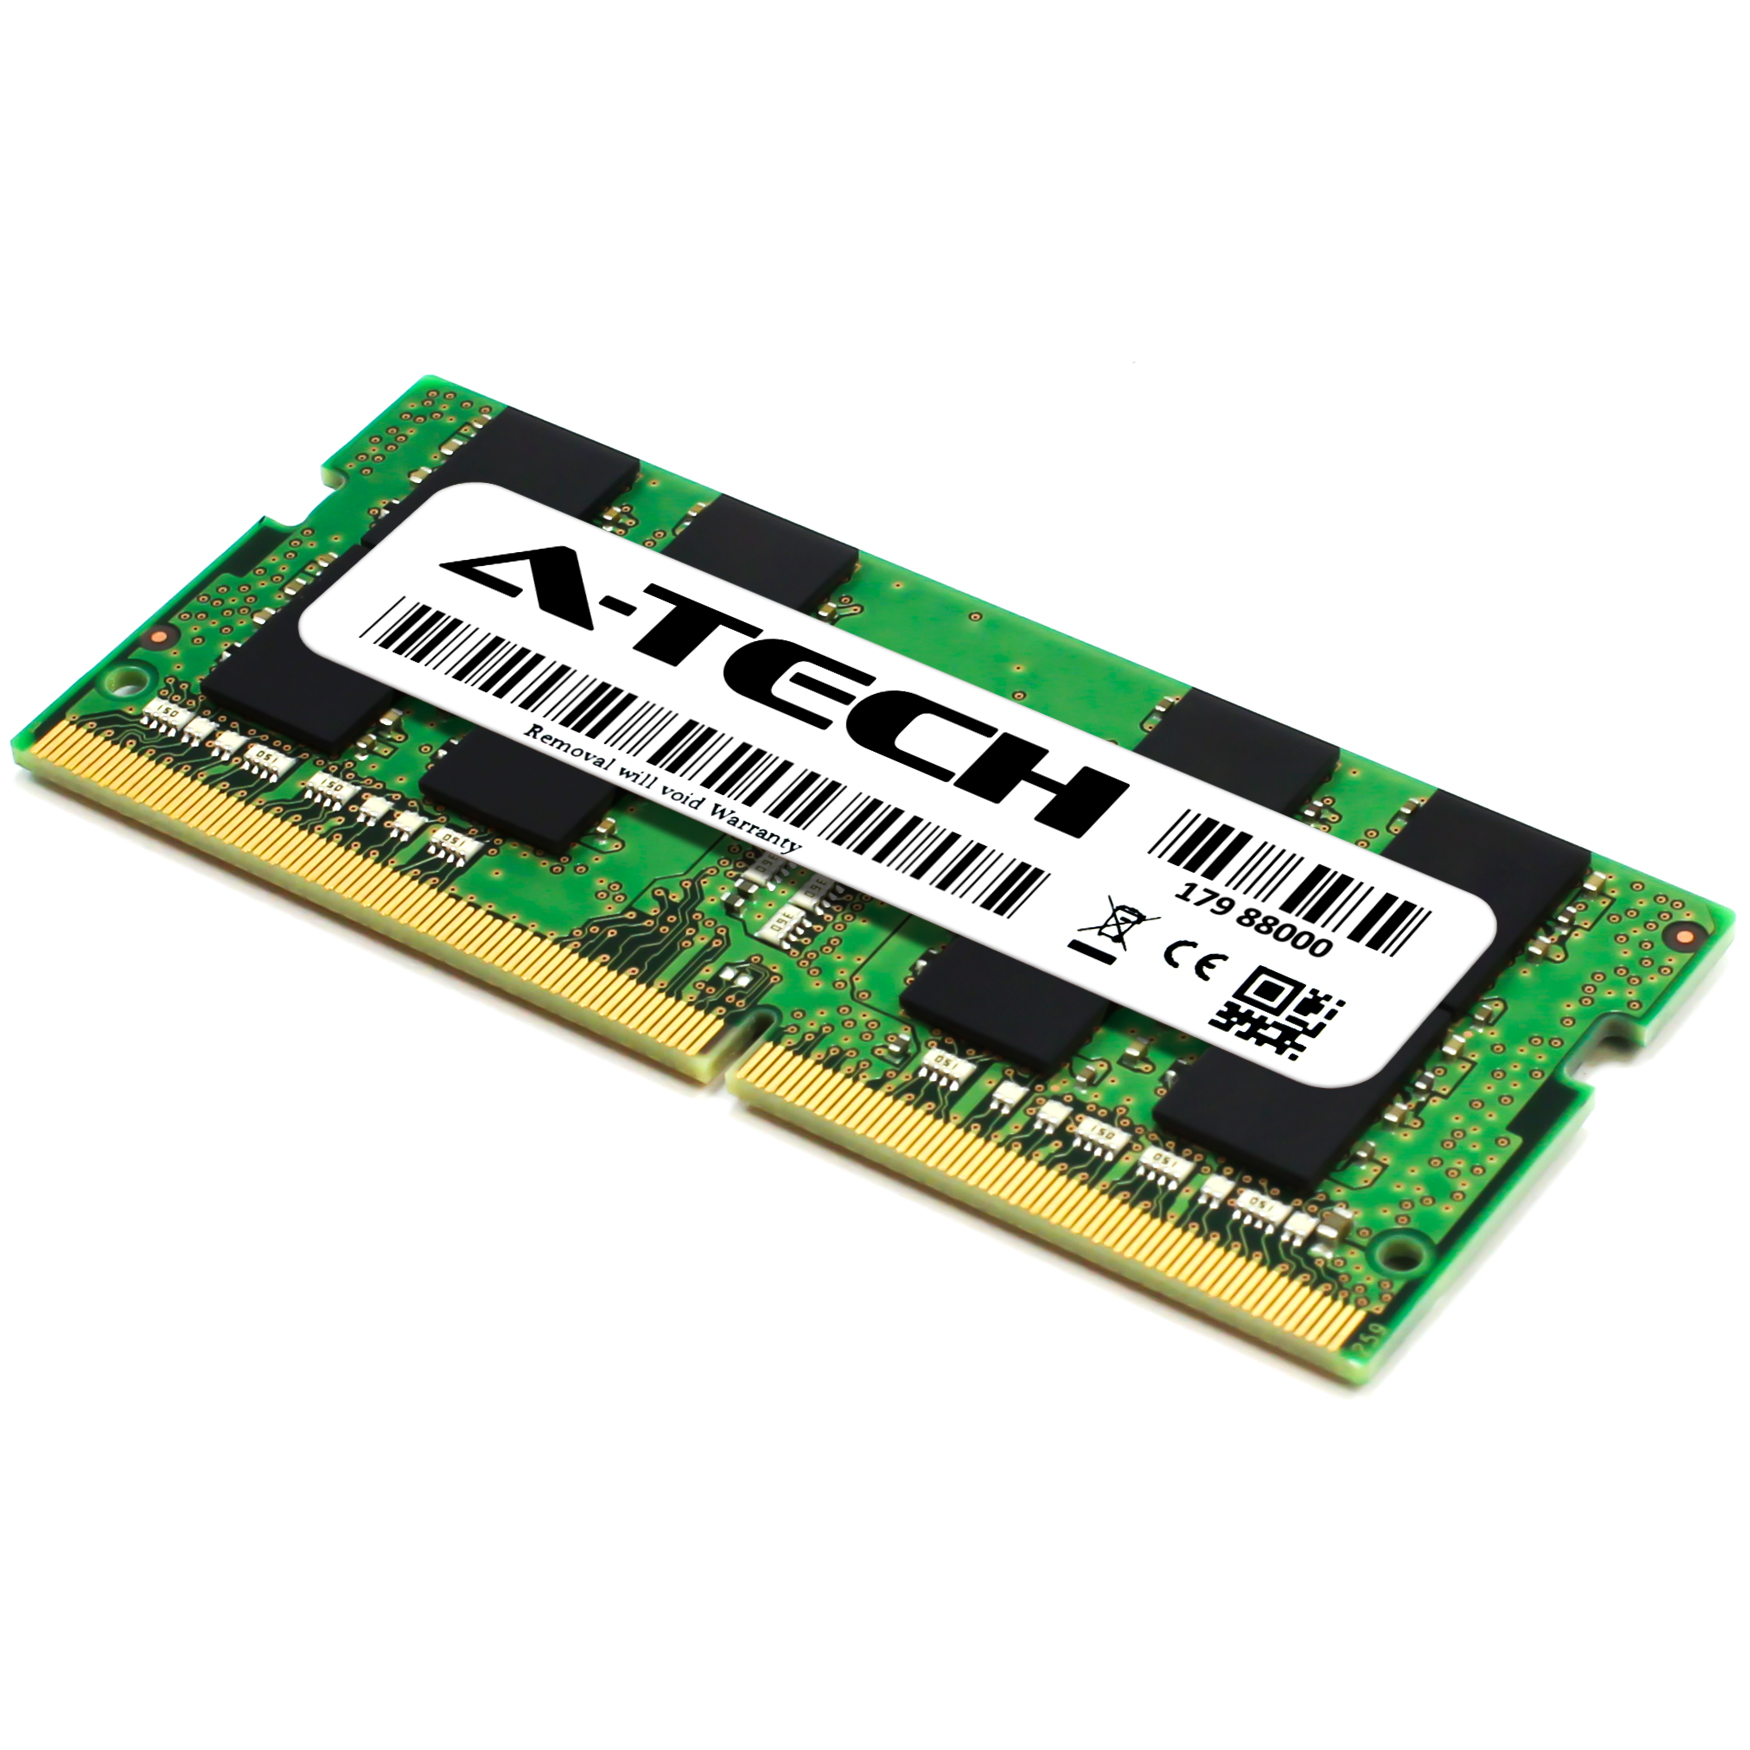 16GB 2x 8GB Kit PC4-21300 DDR4 2666 SO-DIMM Memory RAM for ASUS 